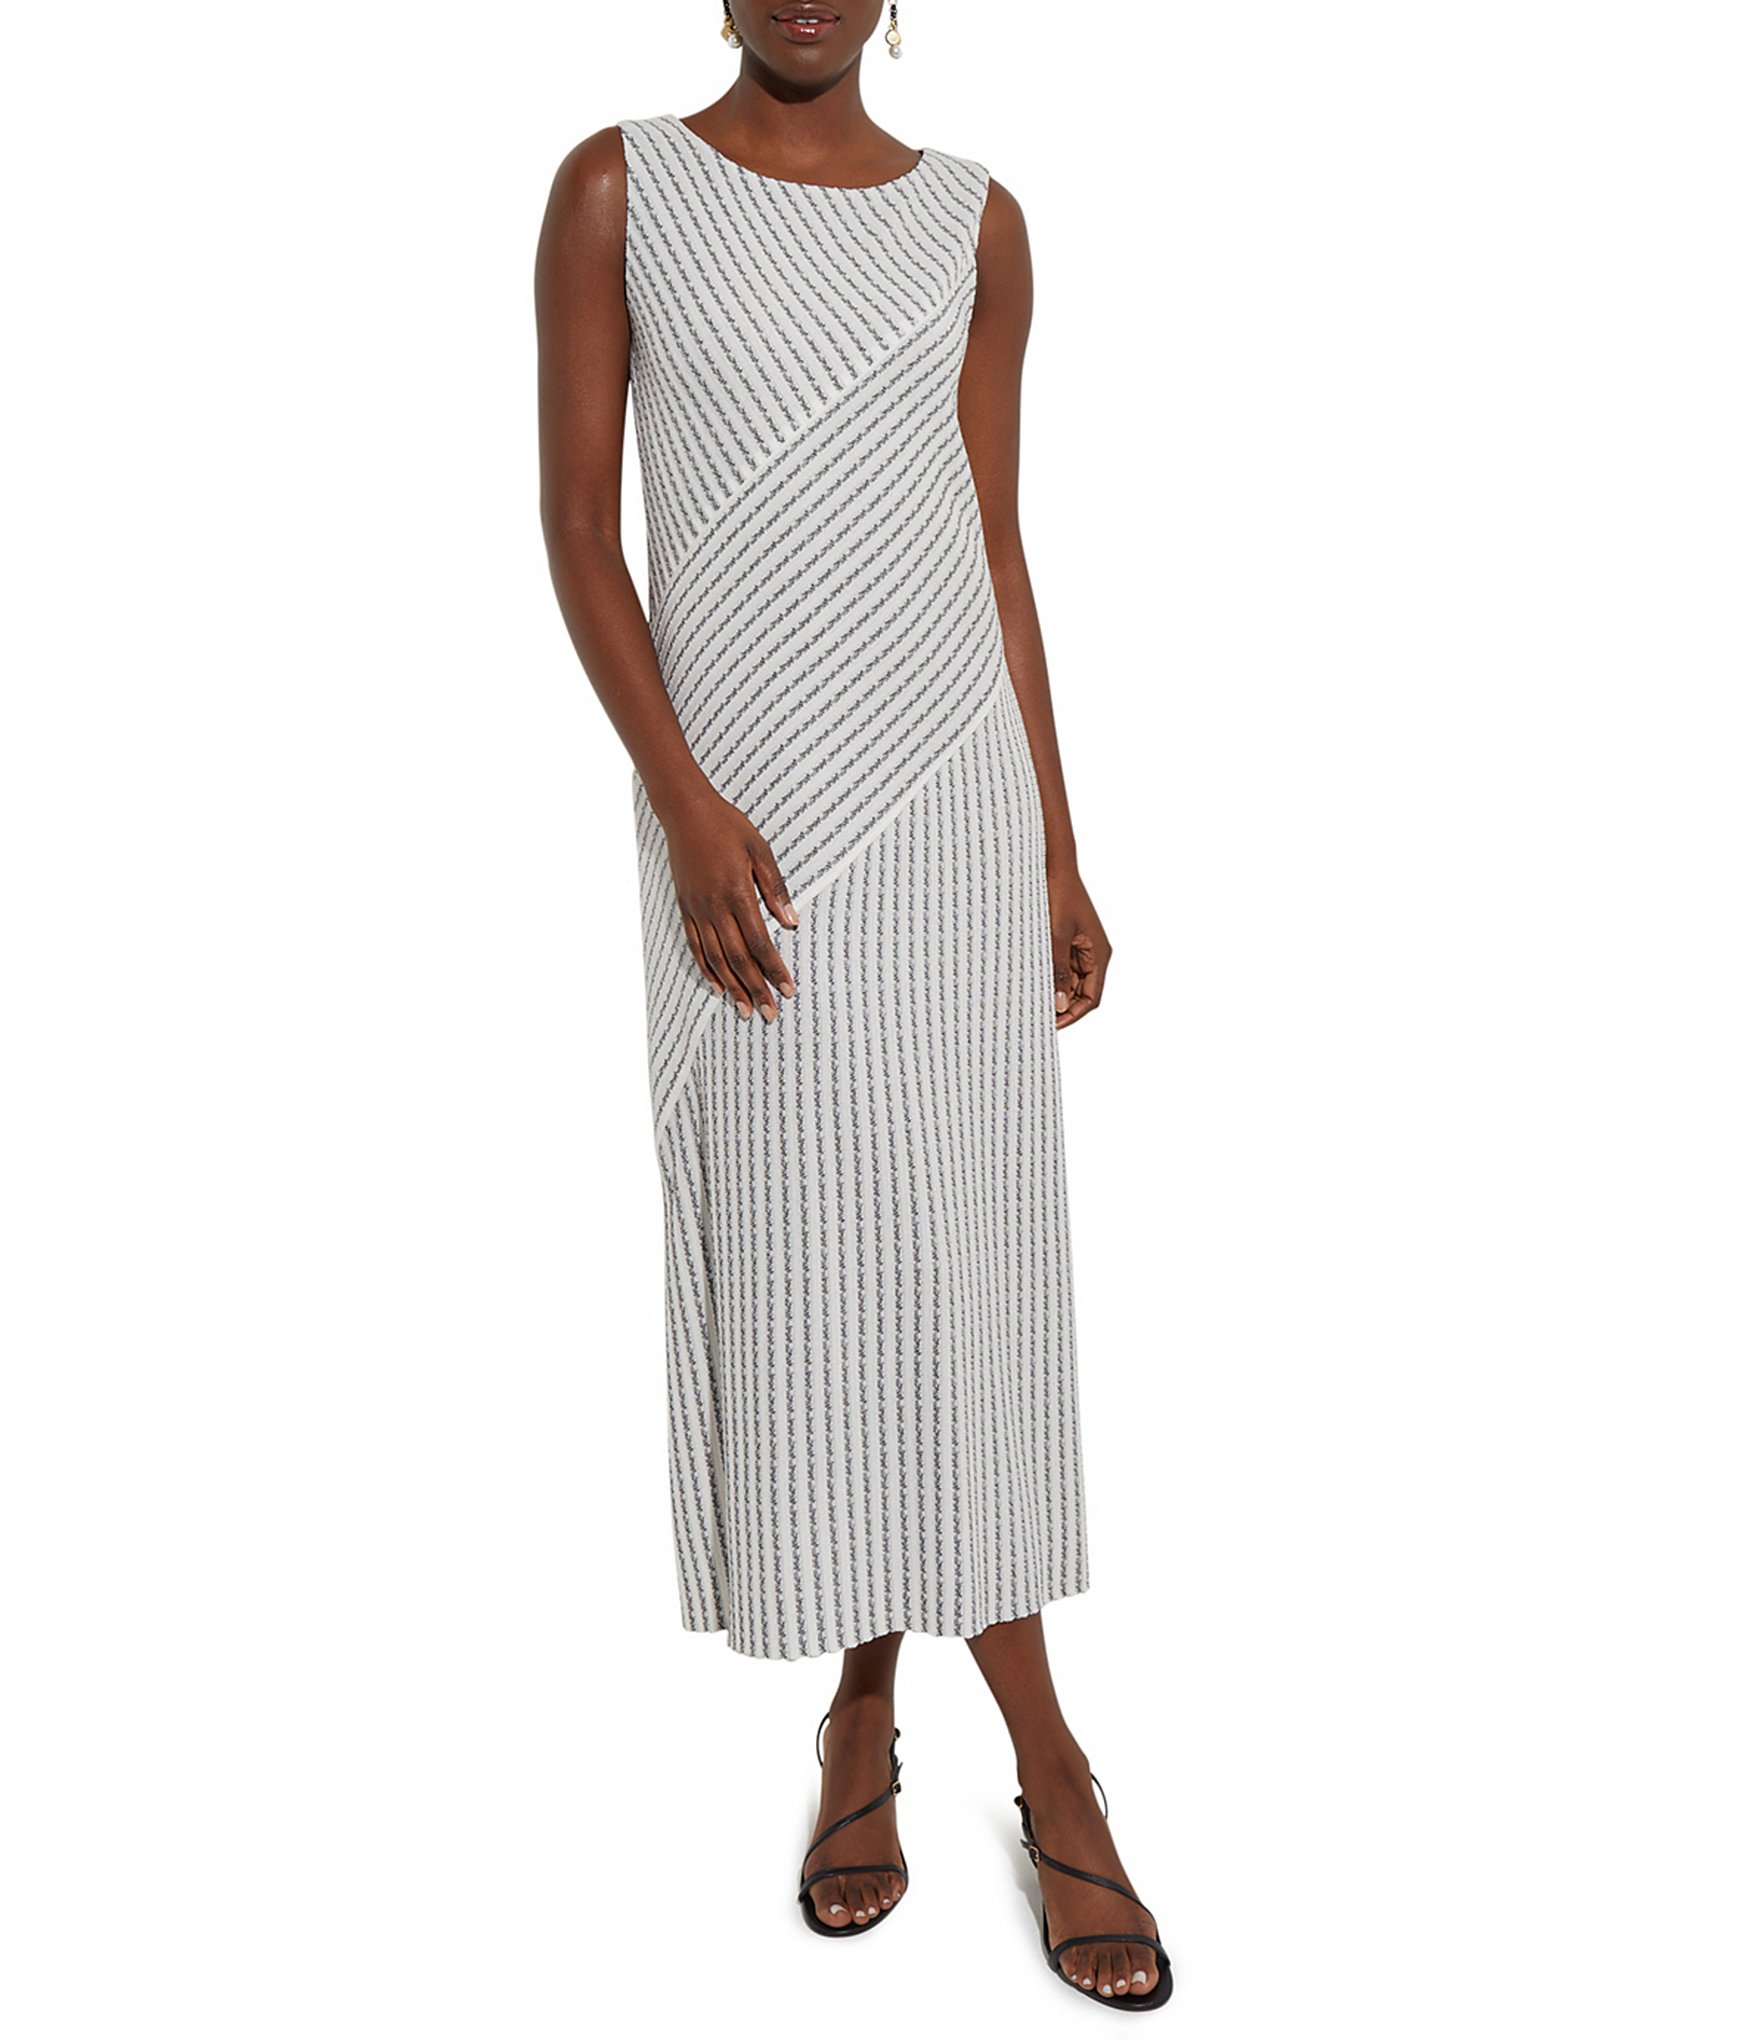 MISOOK Soft Knit Contrast Stripe Print Jewel Neck Sleeveless A-Line ...